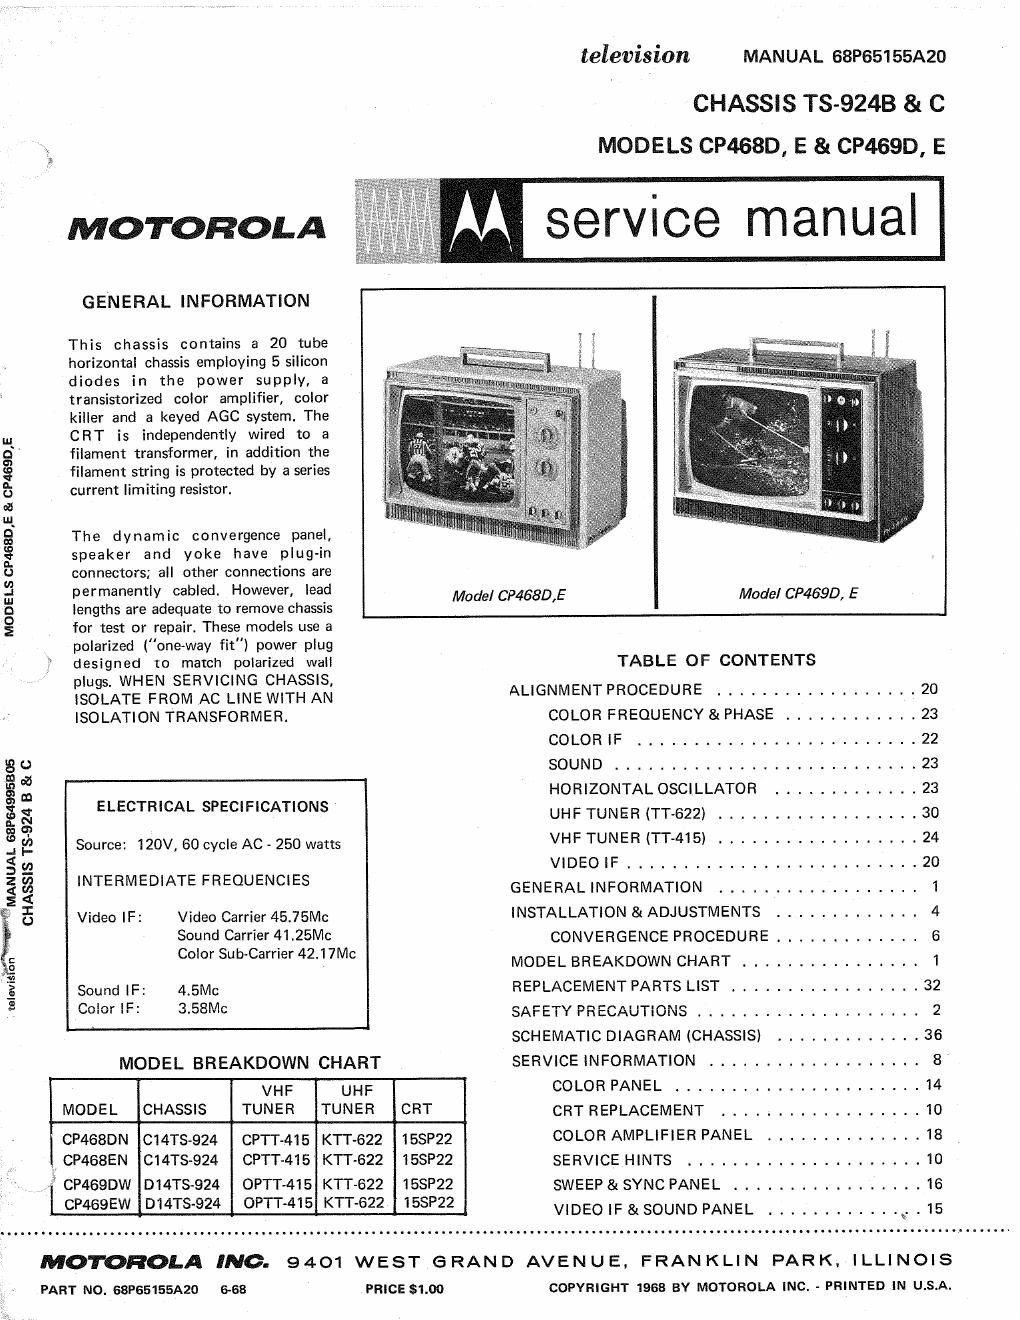 motorola cp 468 d service manual